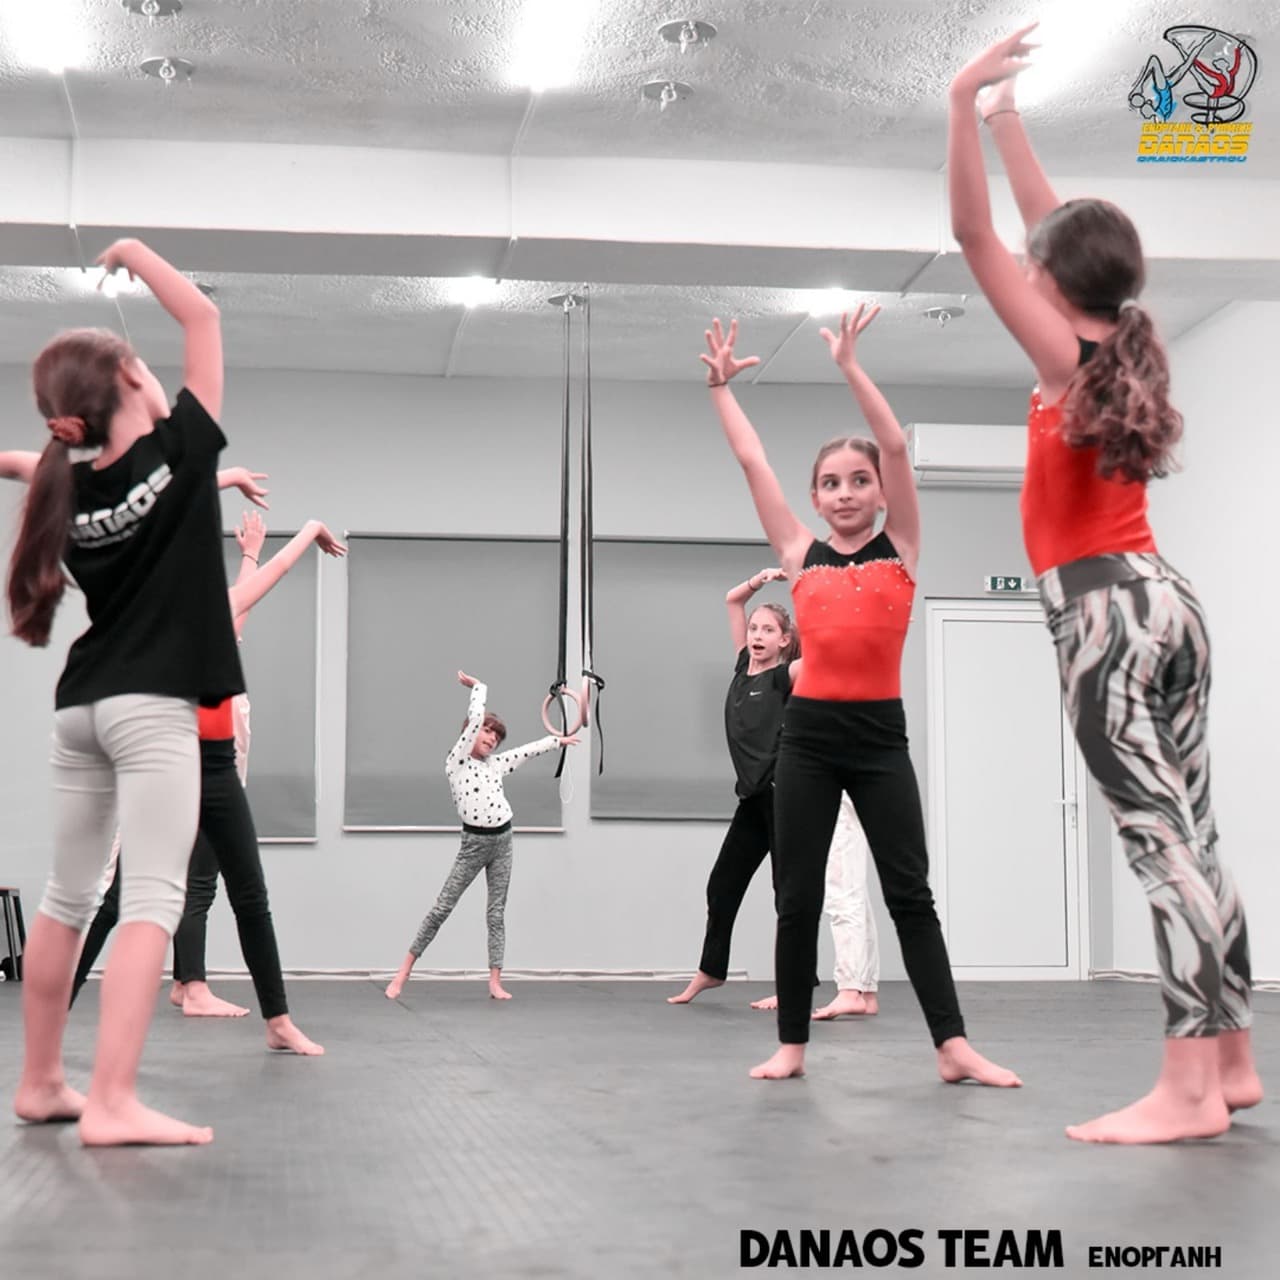 danaos-oraiokastro-enorgani-gimnastiki-sportshunter-12